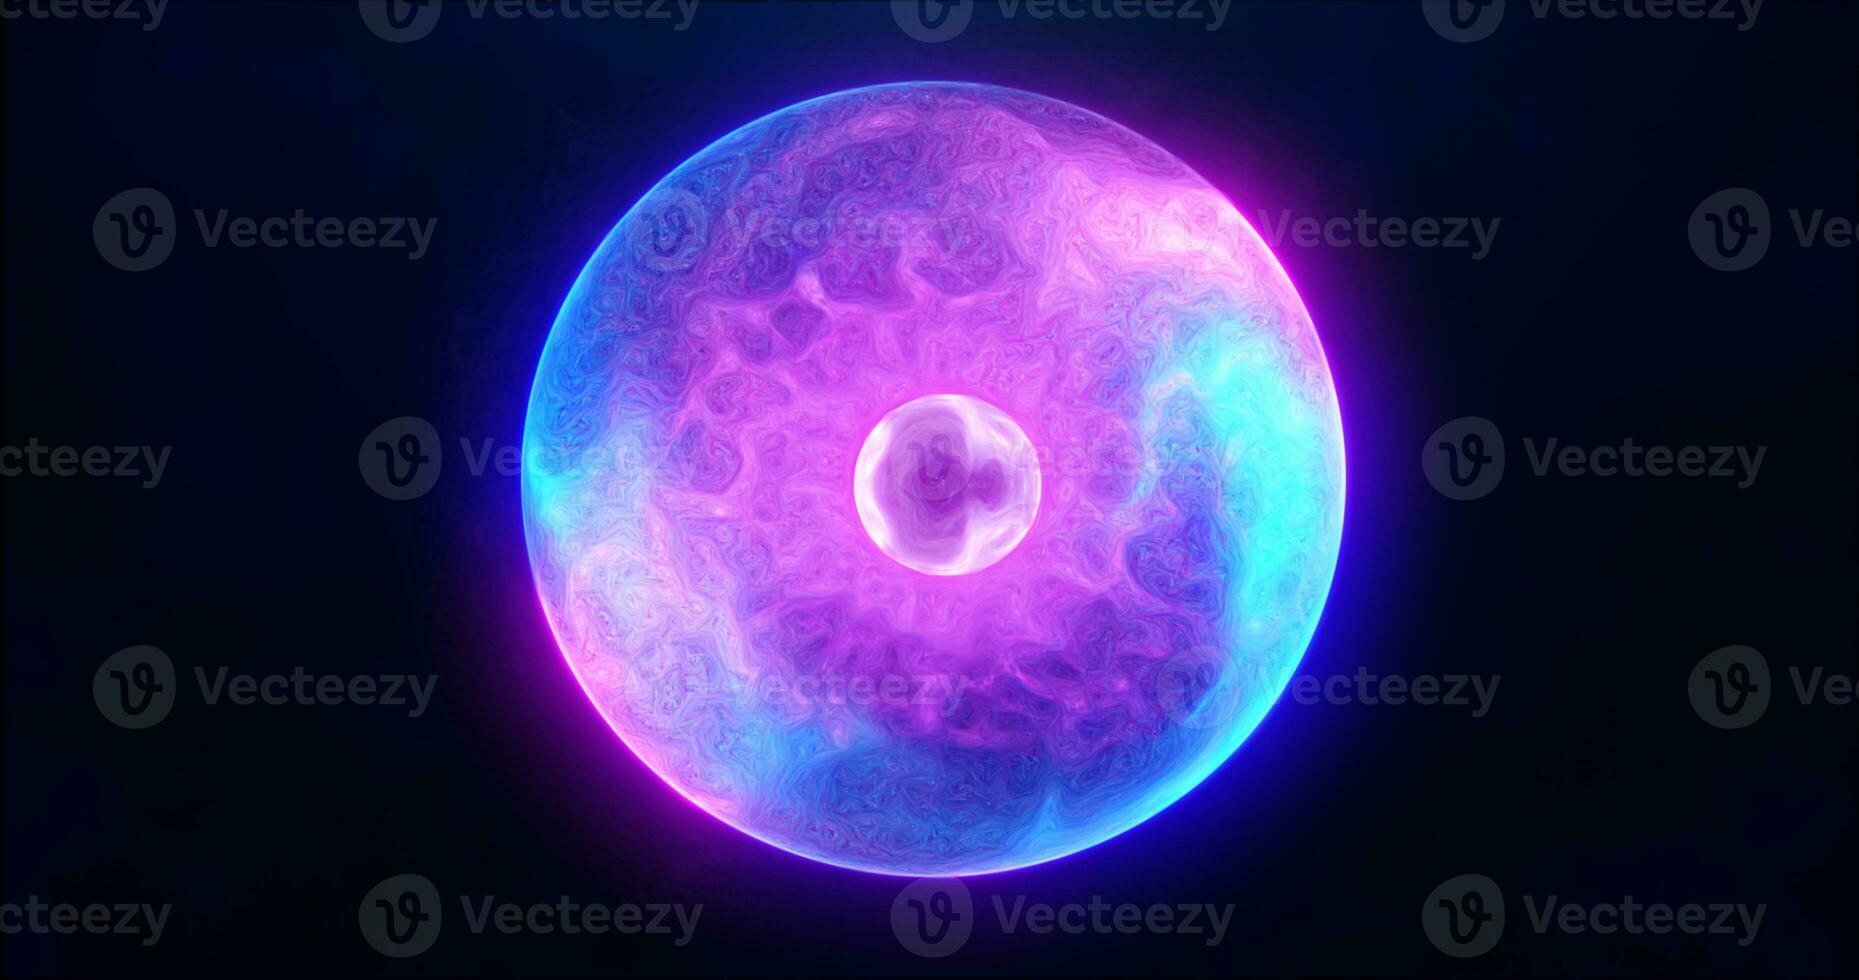 azul roxa energia esfera com brilhando brilhante partículas, átomo com elétrons e elétrica Magia campo científico futurista oi-tech abstrato fundo foto